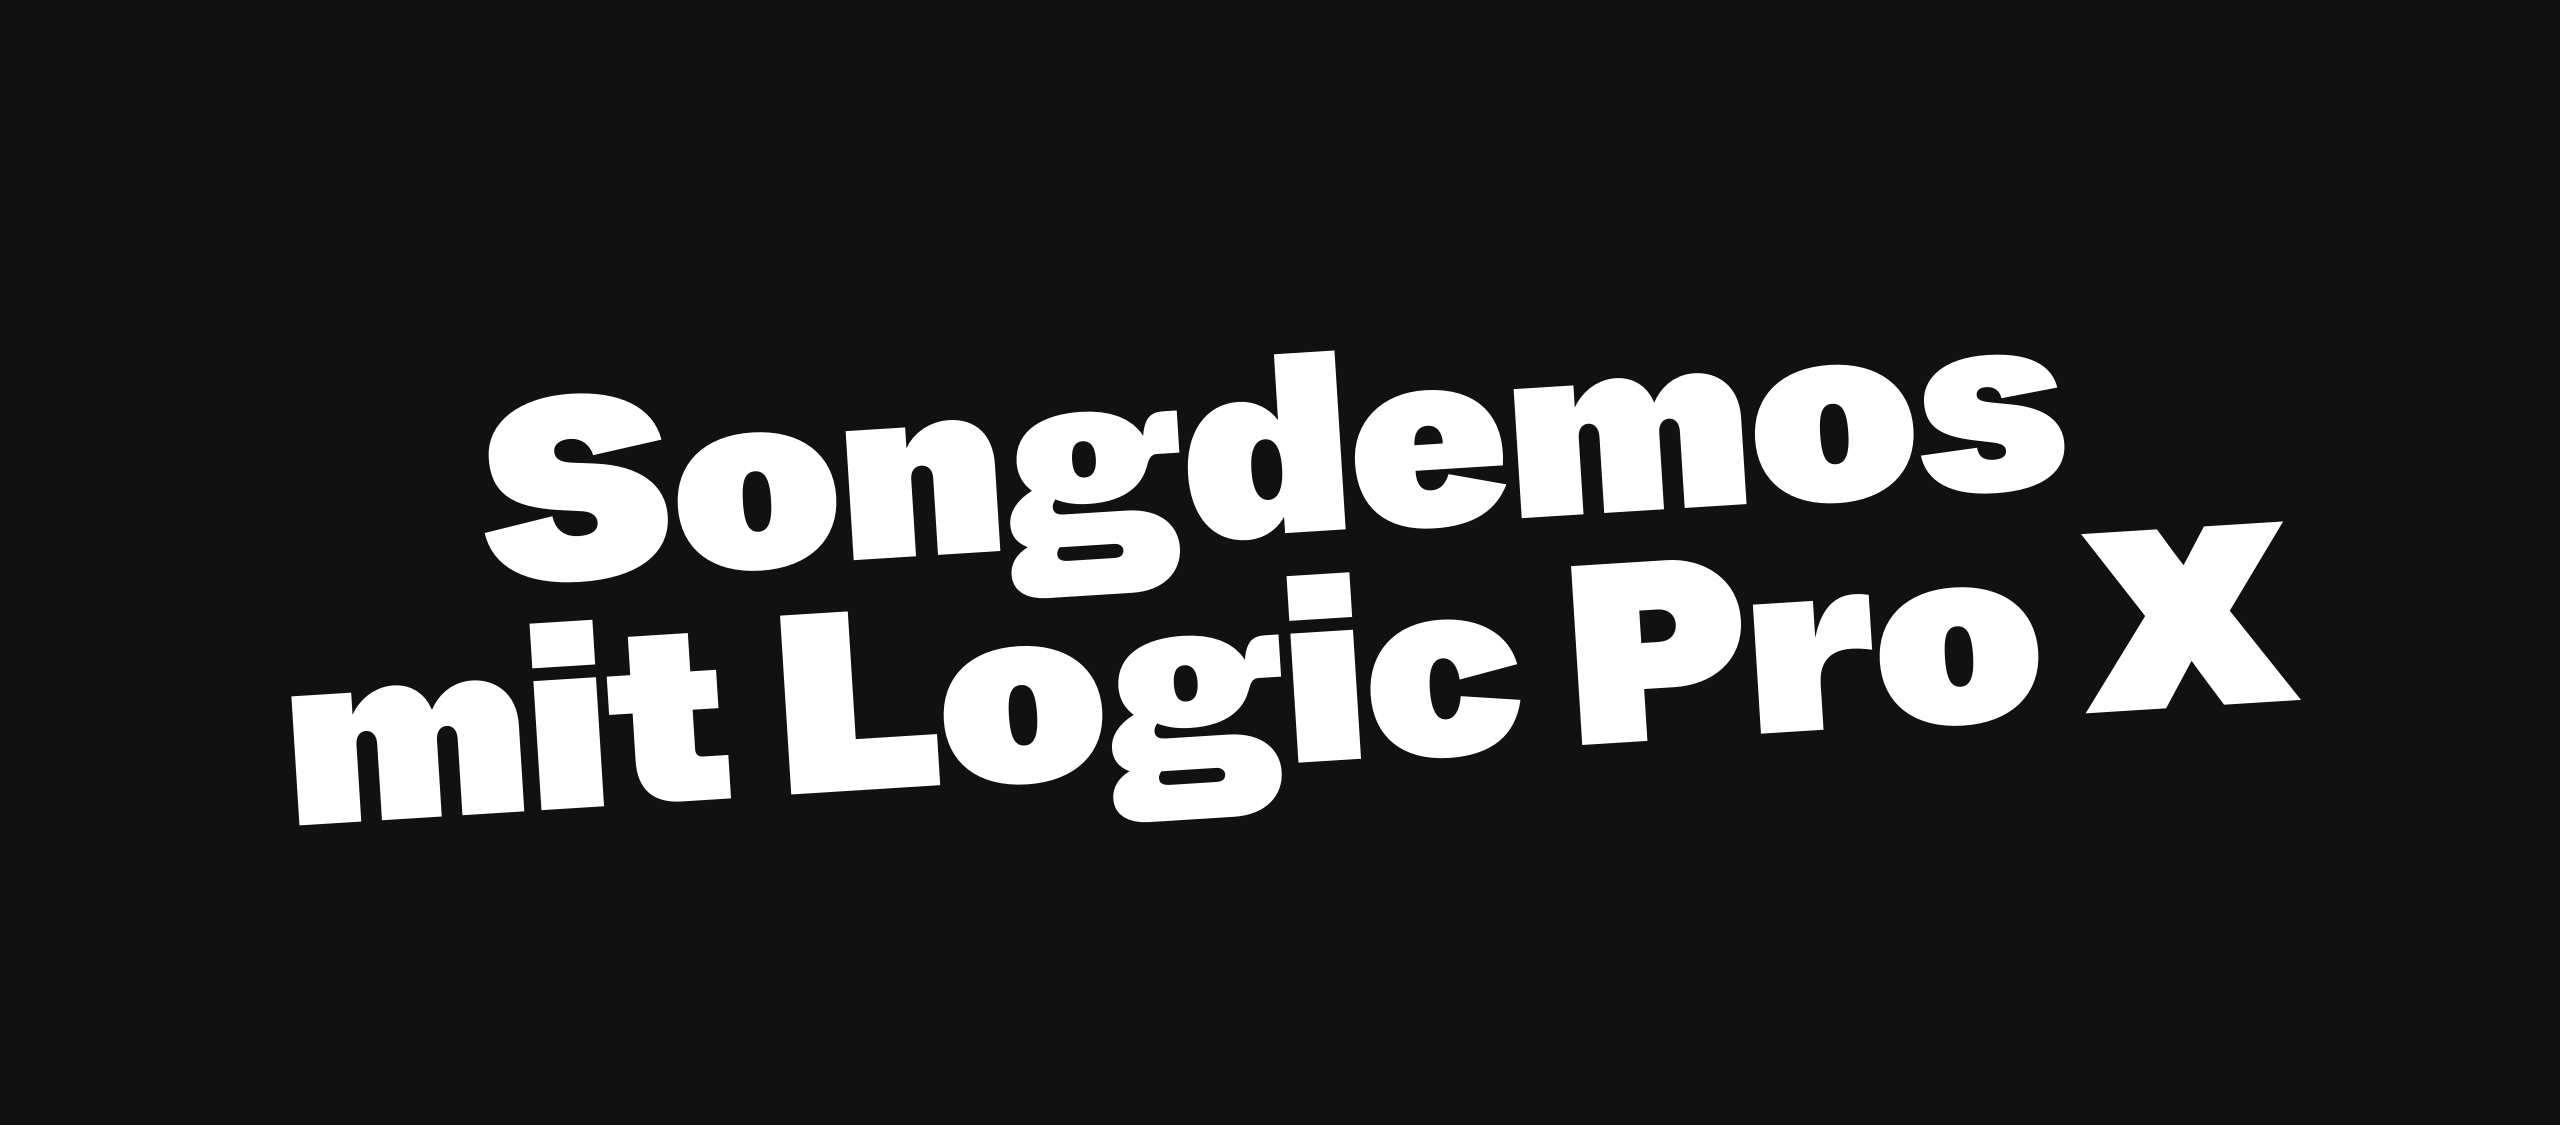 Songdemos mit Logic Pro X